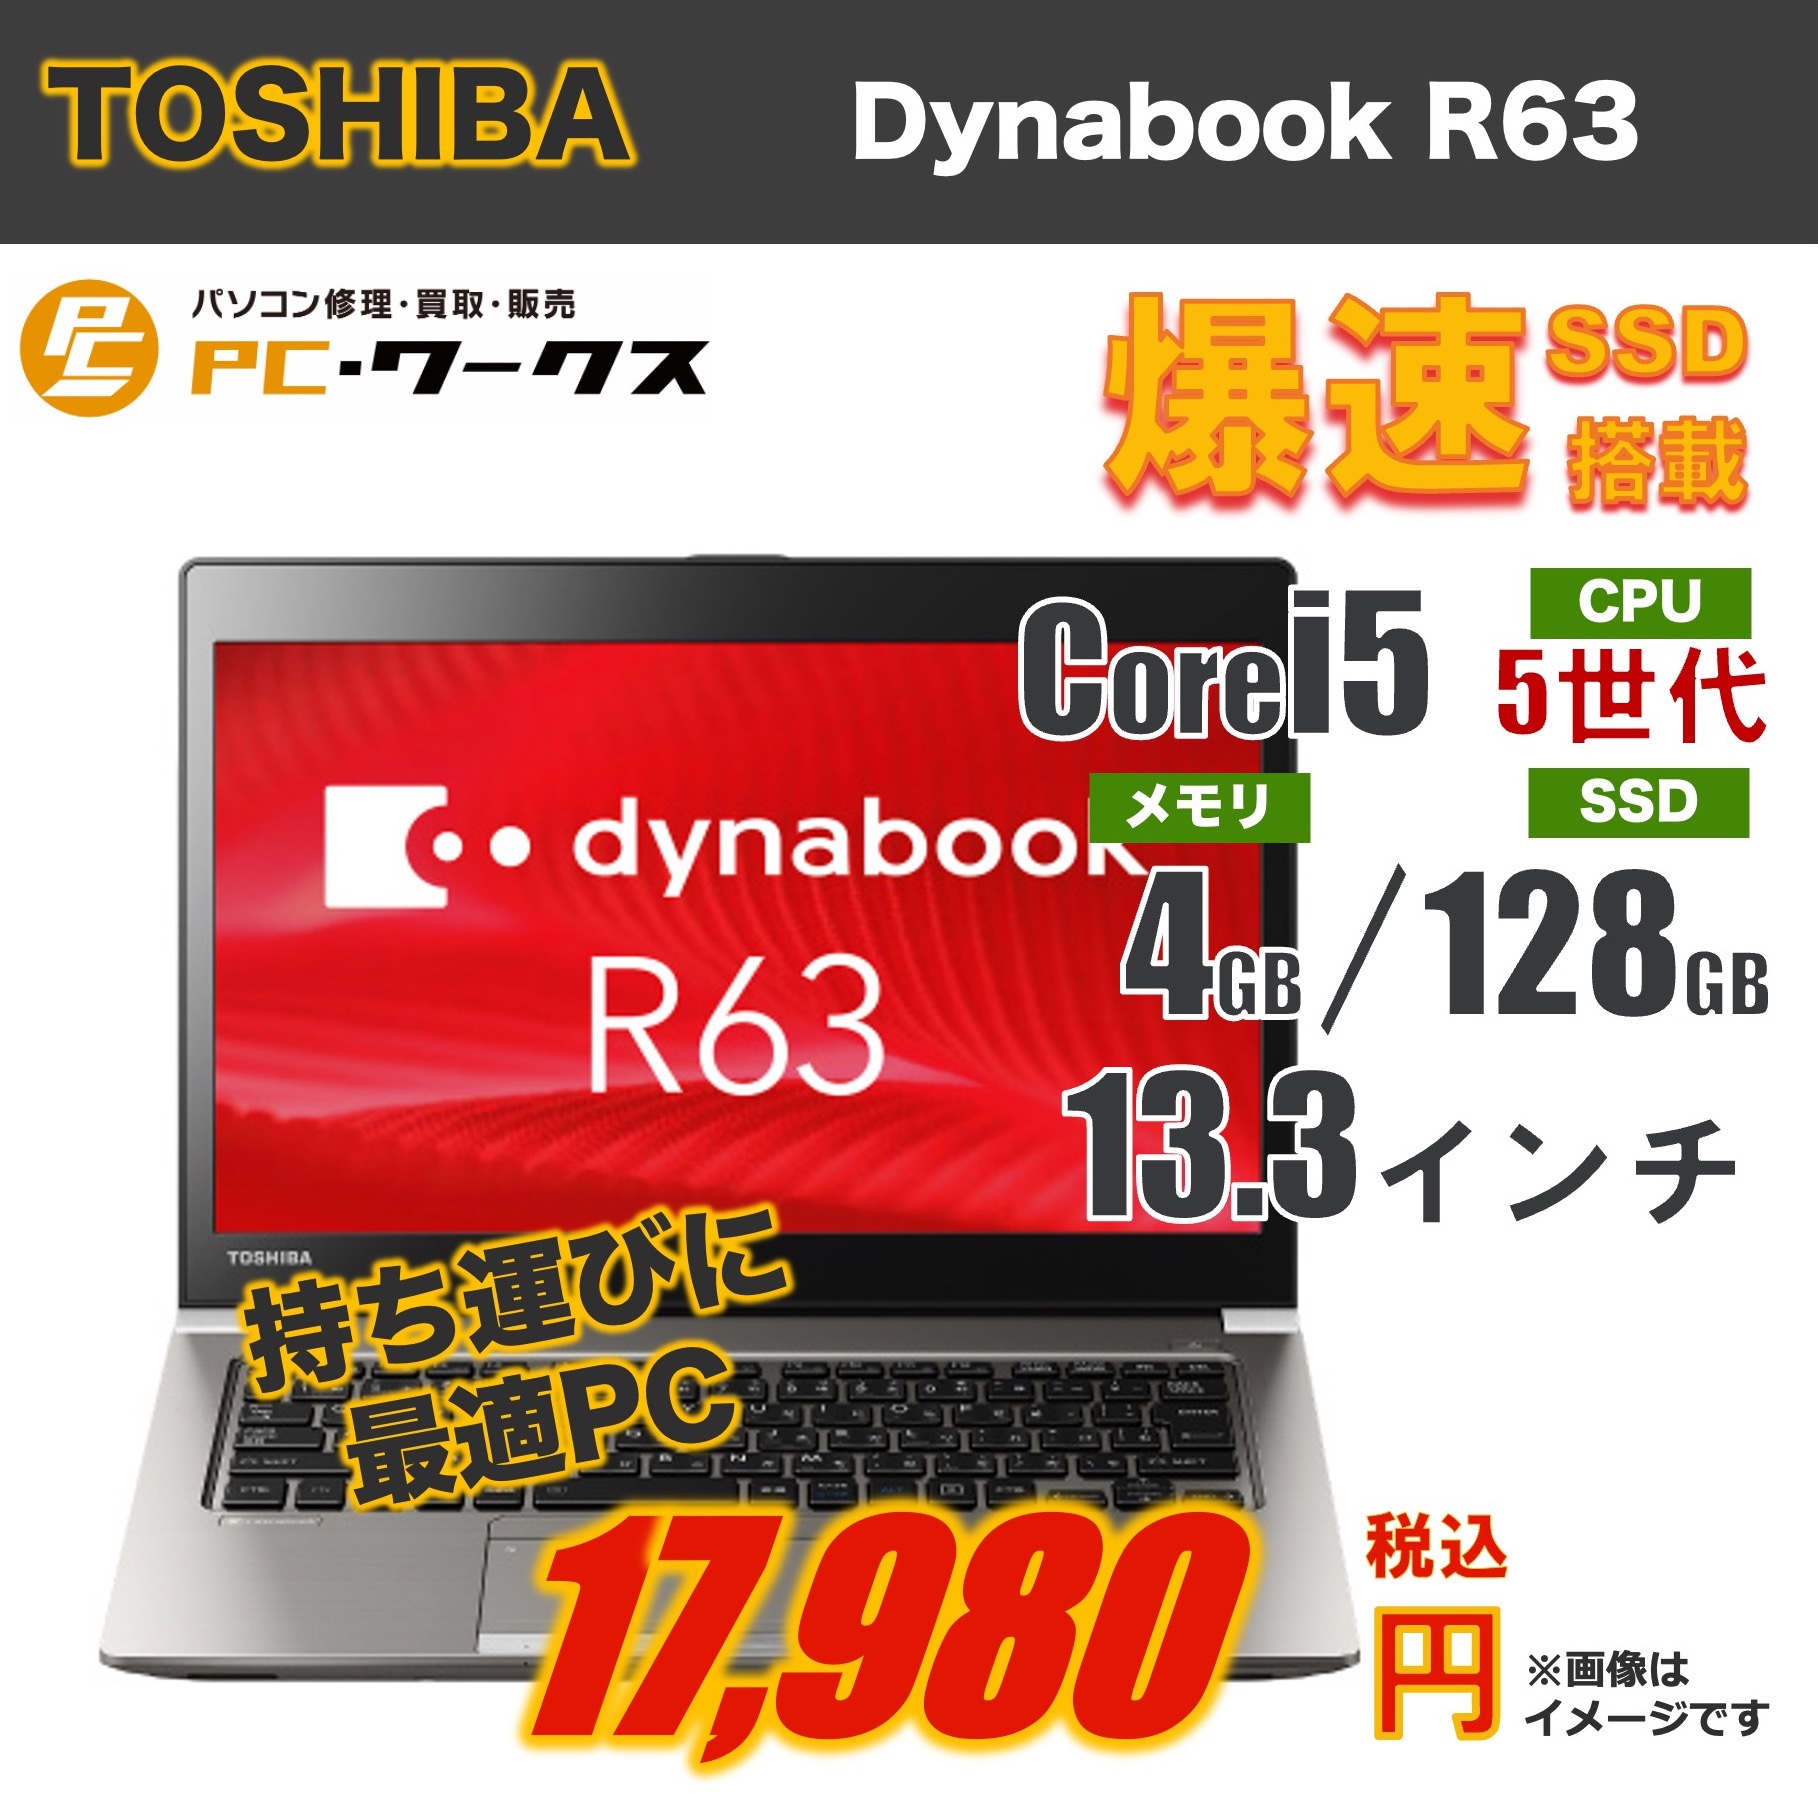 TOSHIBA 東芝 Dynabook ダイナブック R63 Corei5 5世代